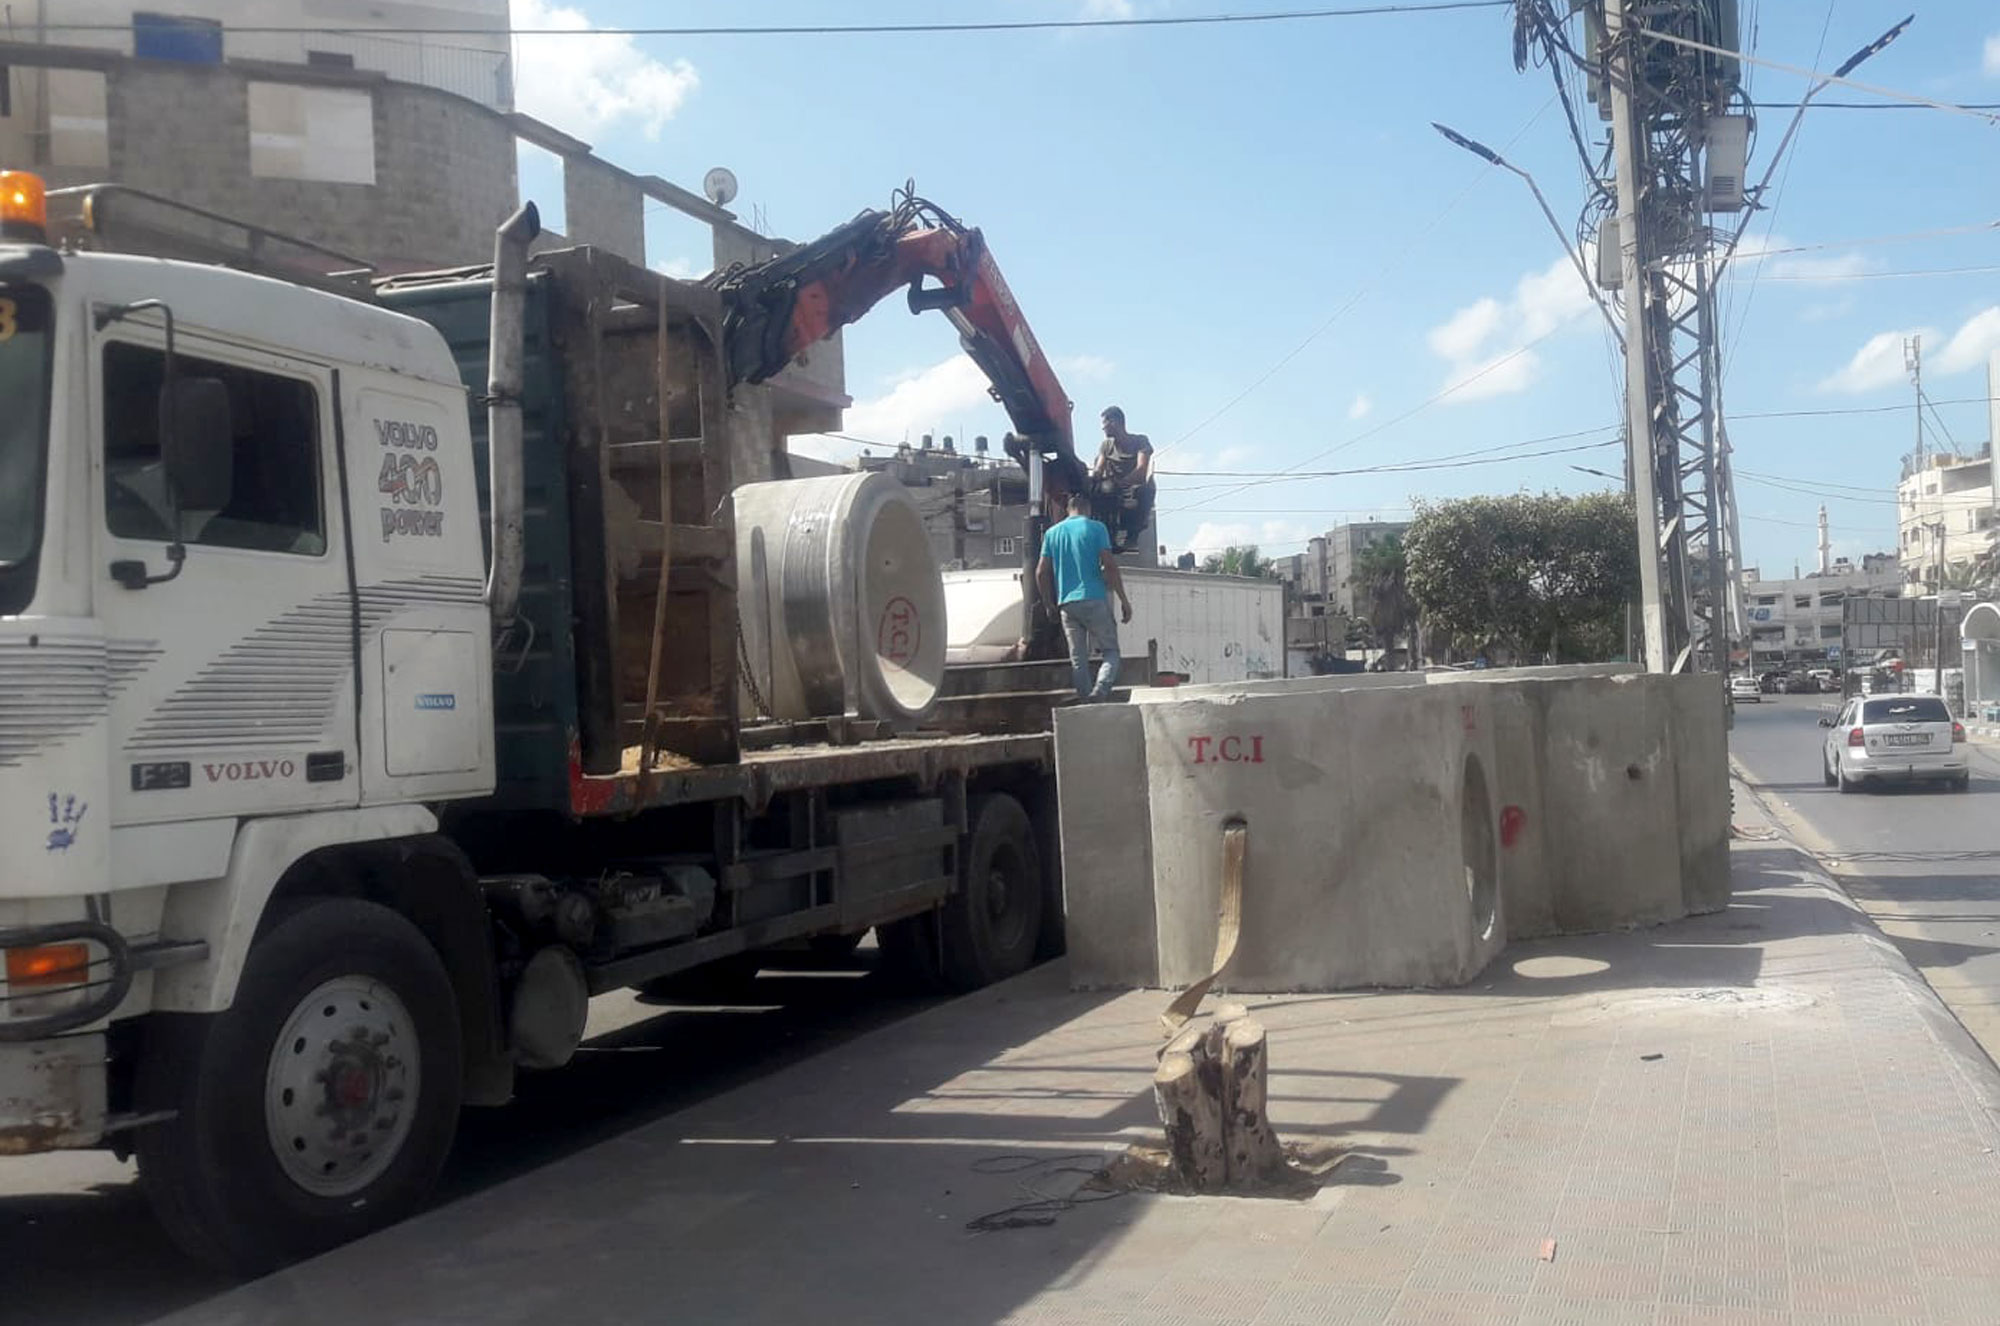 A truck unloads massive cement pipe segments that will direct water runoff.